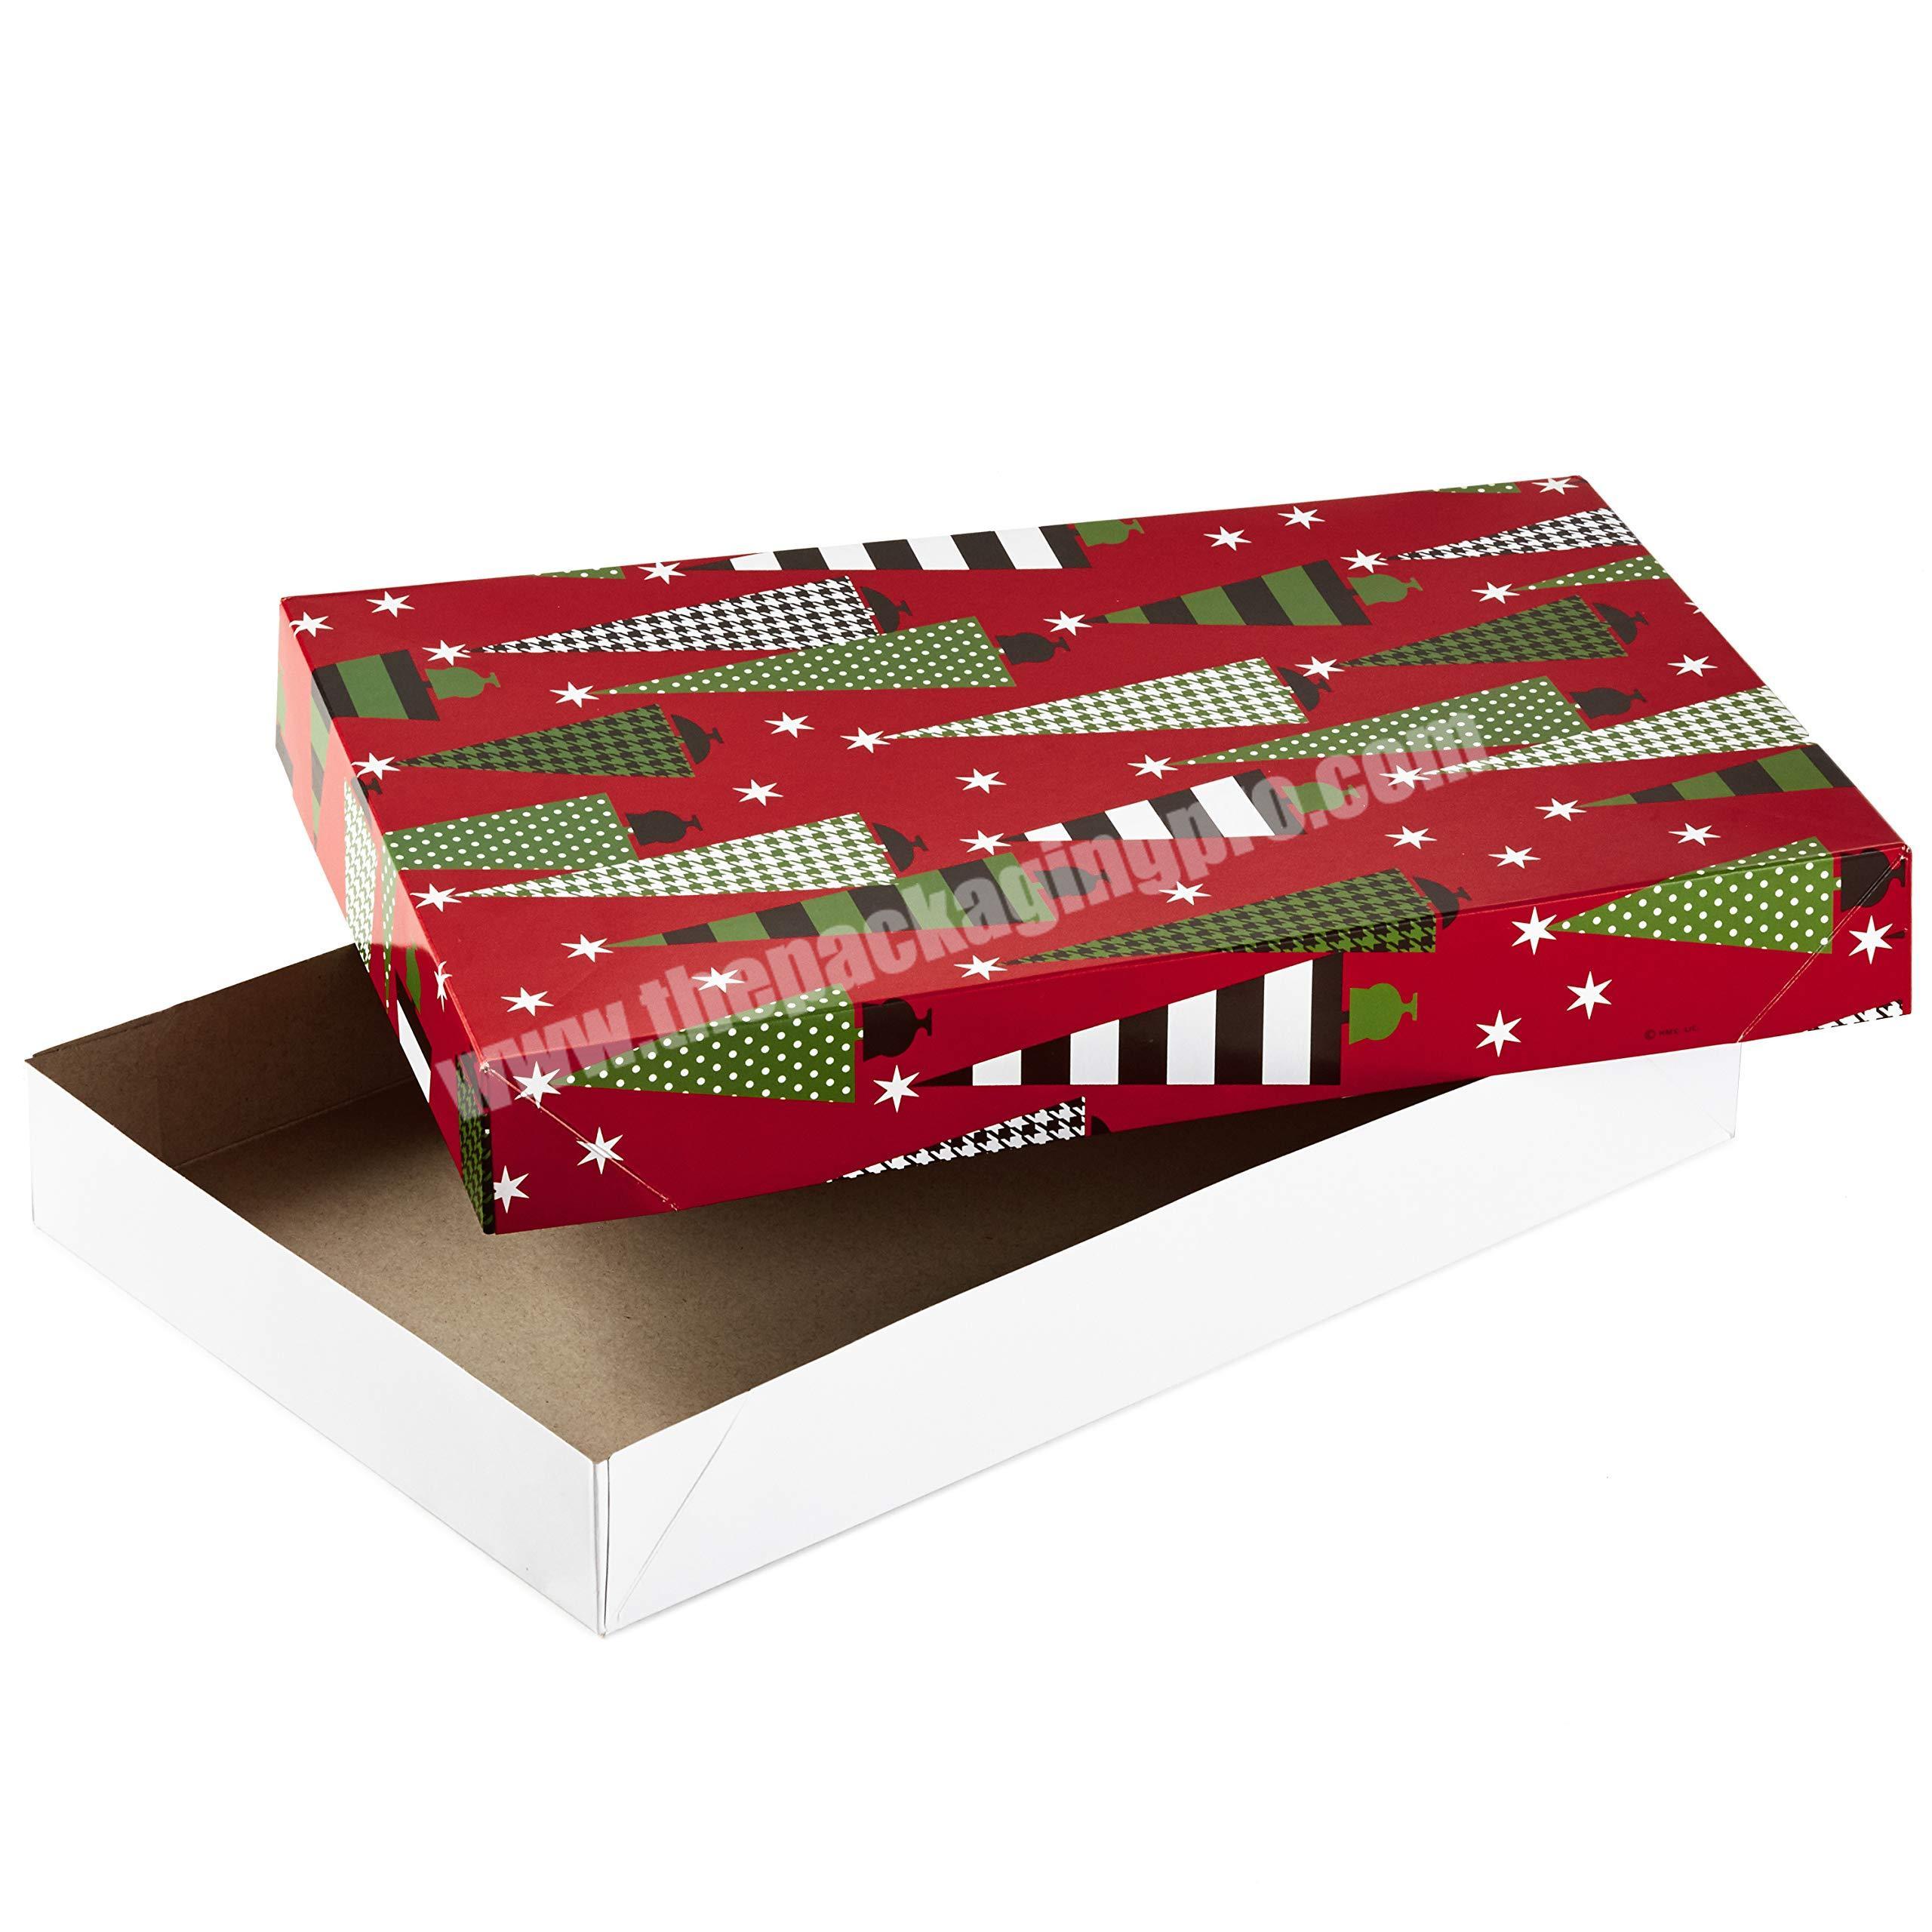 KINSUN  Gift Chocolate Birthday Cake Photo Album Boxes Assembled DIY Jumping Love Christmas Explosion Box explosion gift box